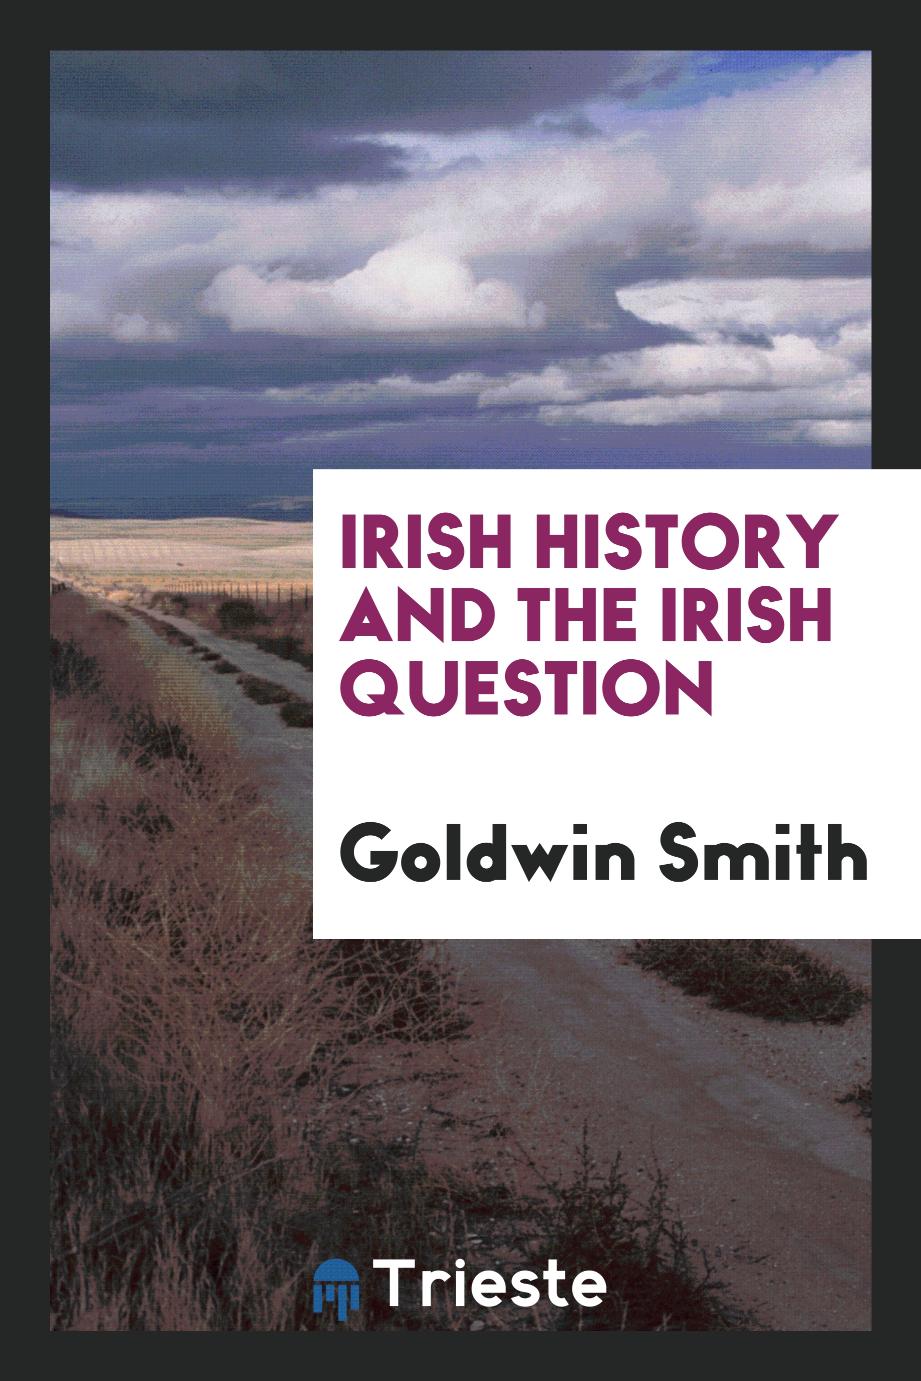 Irish history and the Irish question